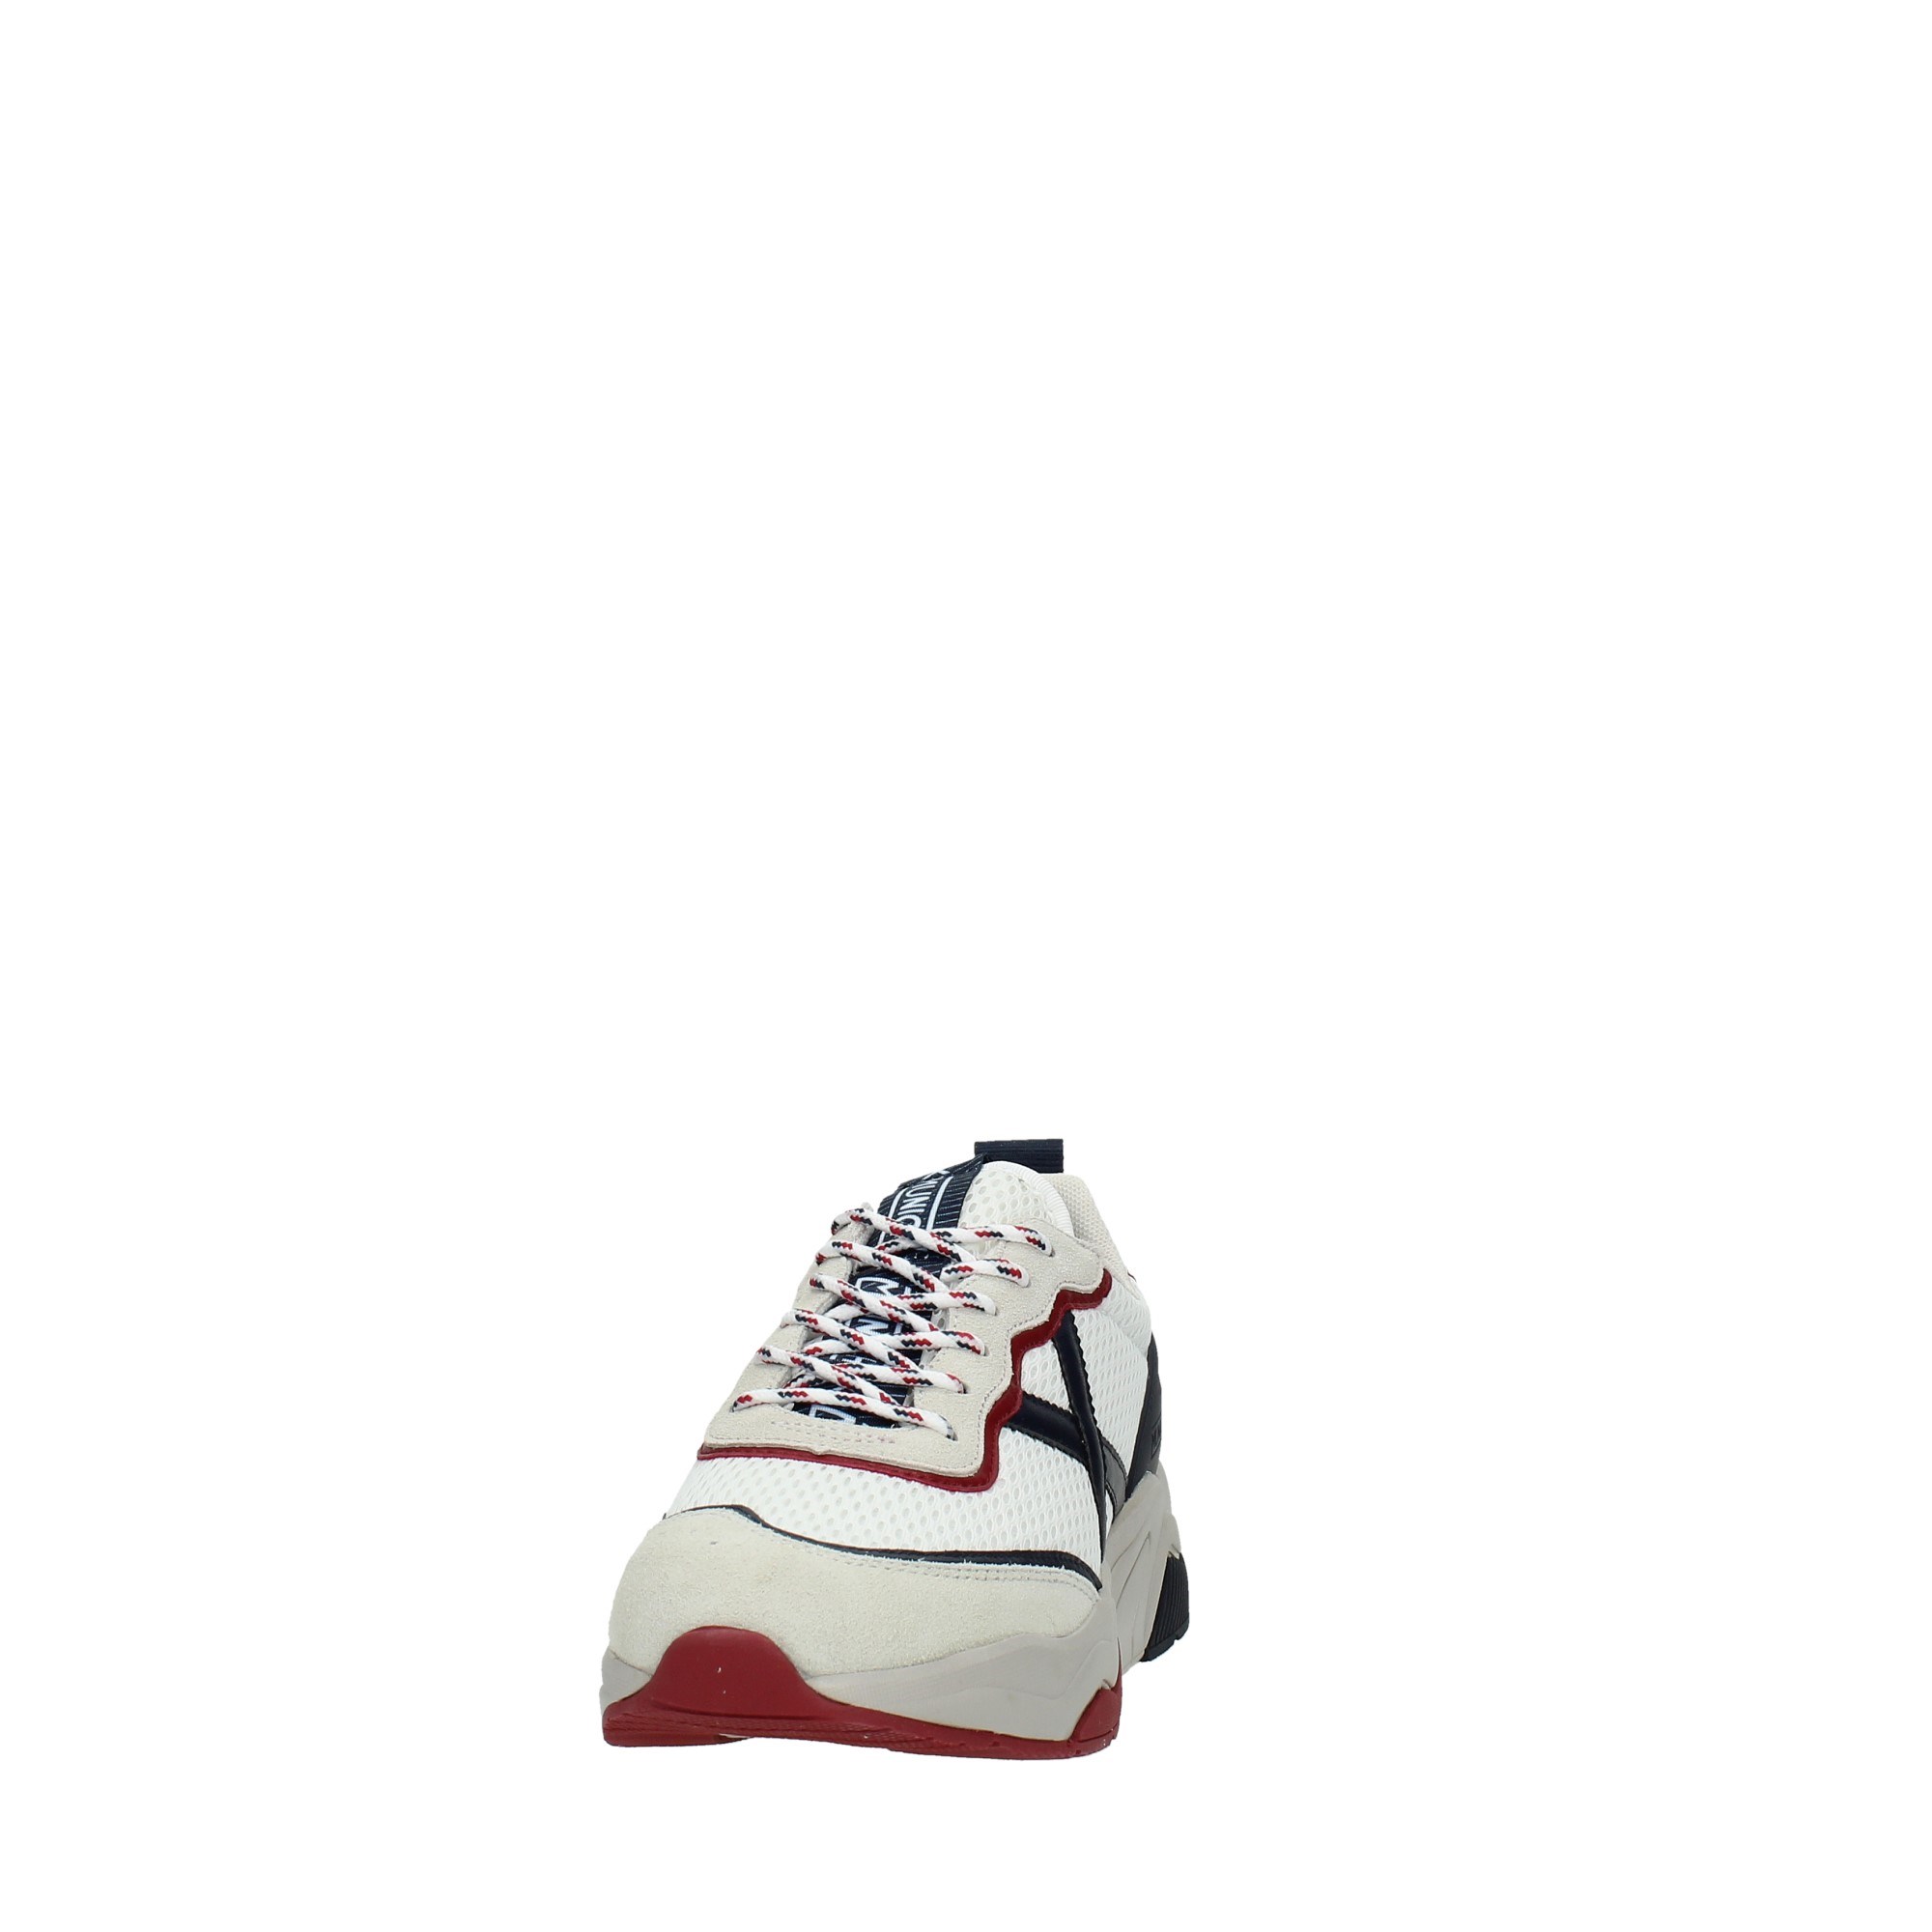 M U N I C H Shoes Man Sneakers Multicolor 8770064